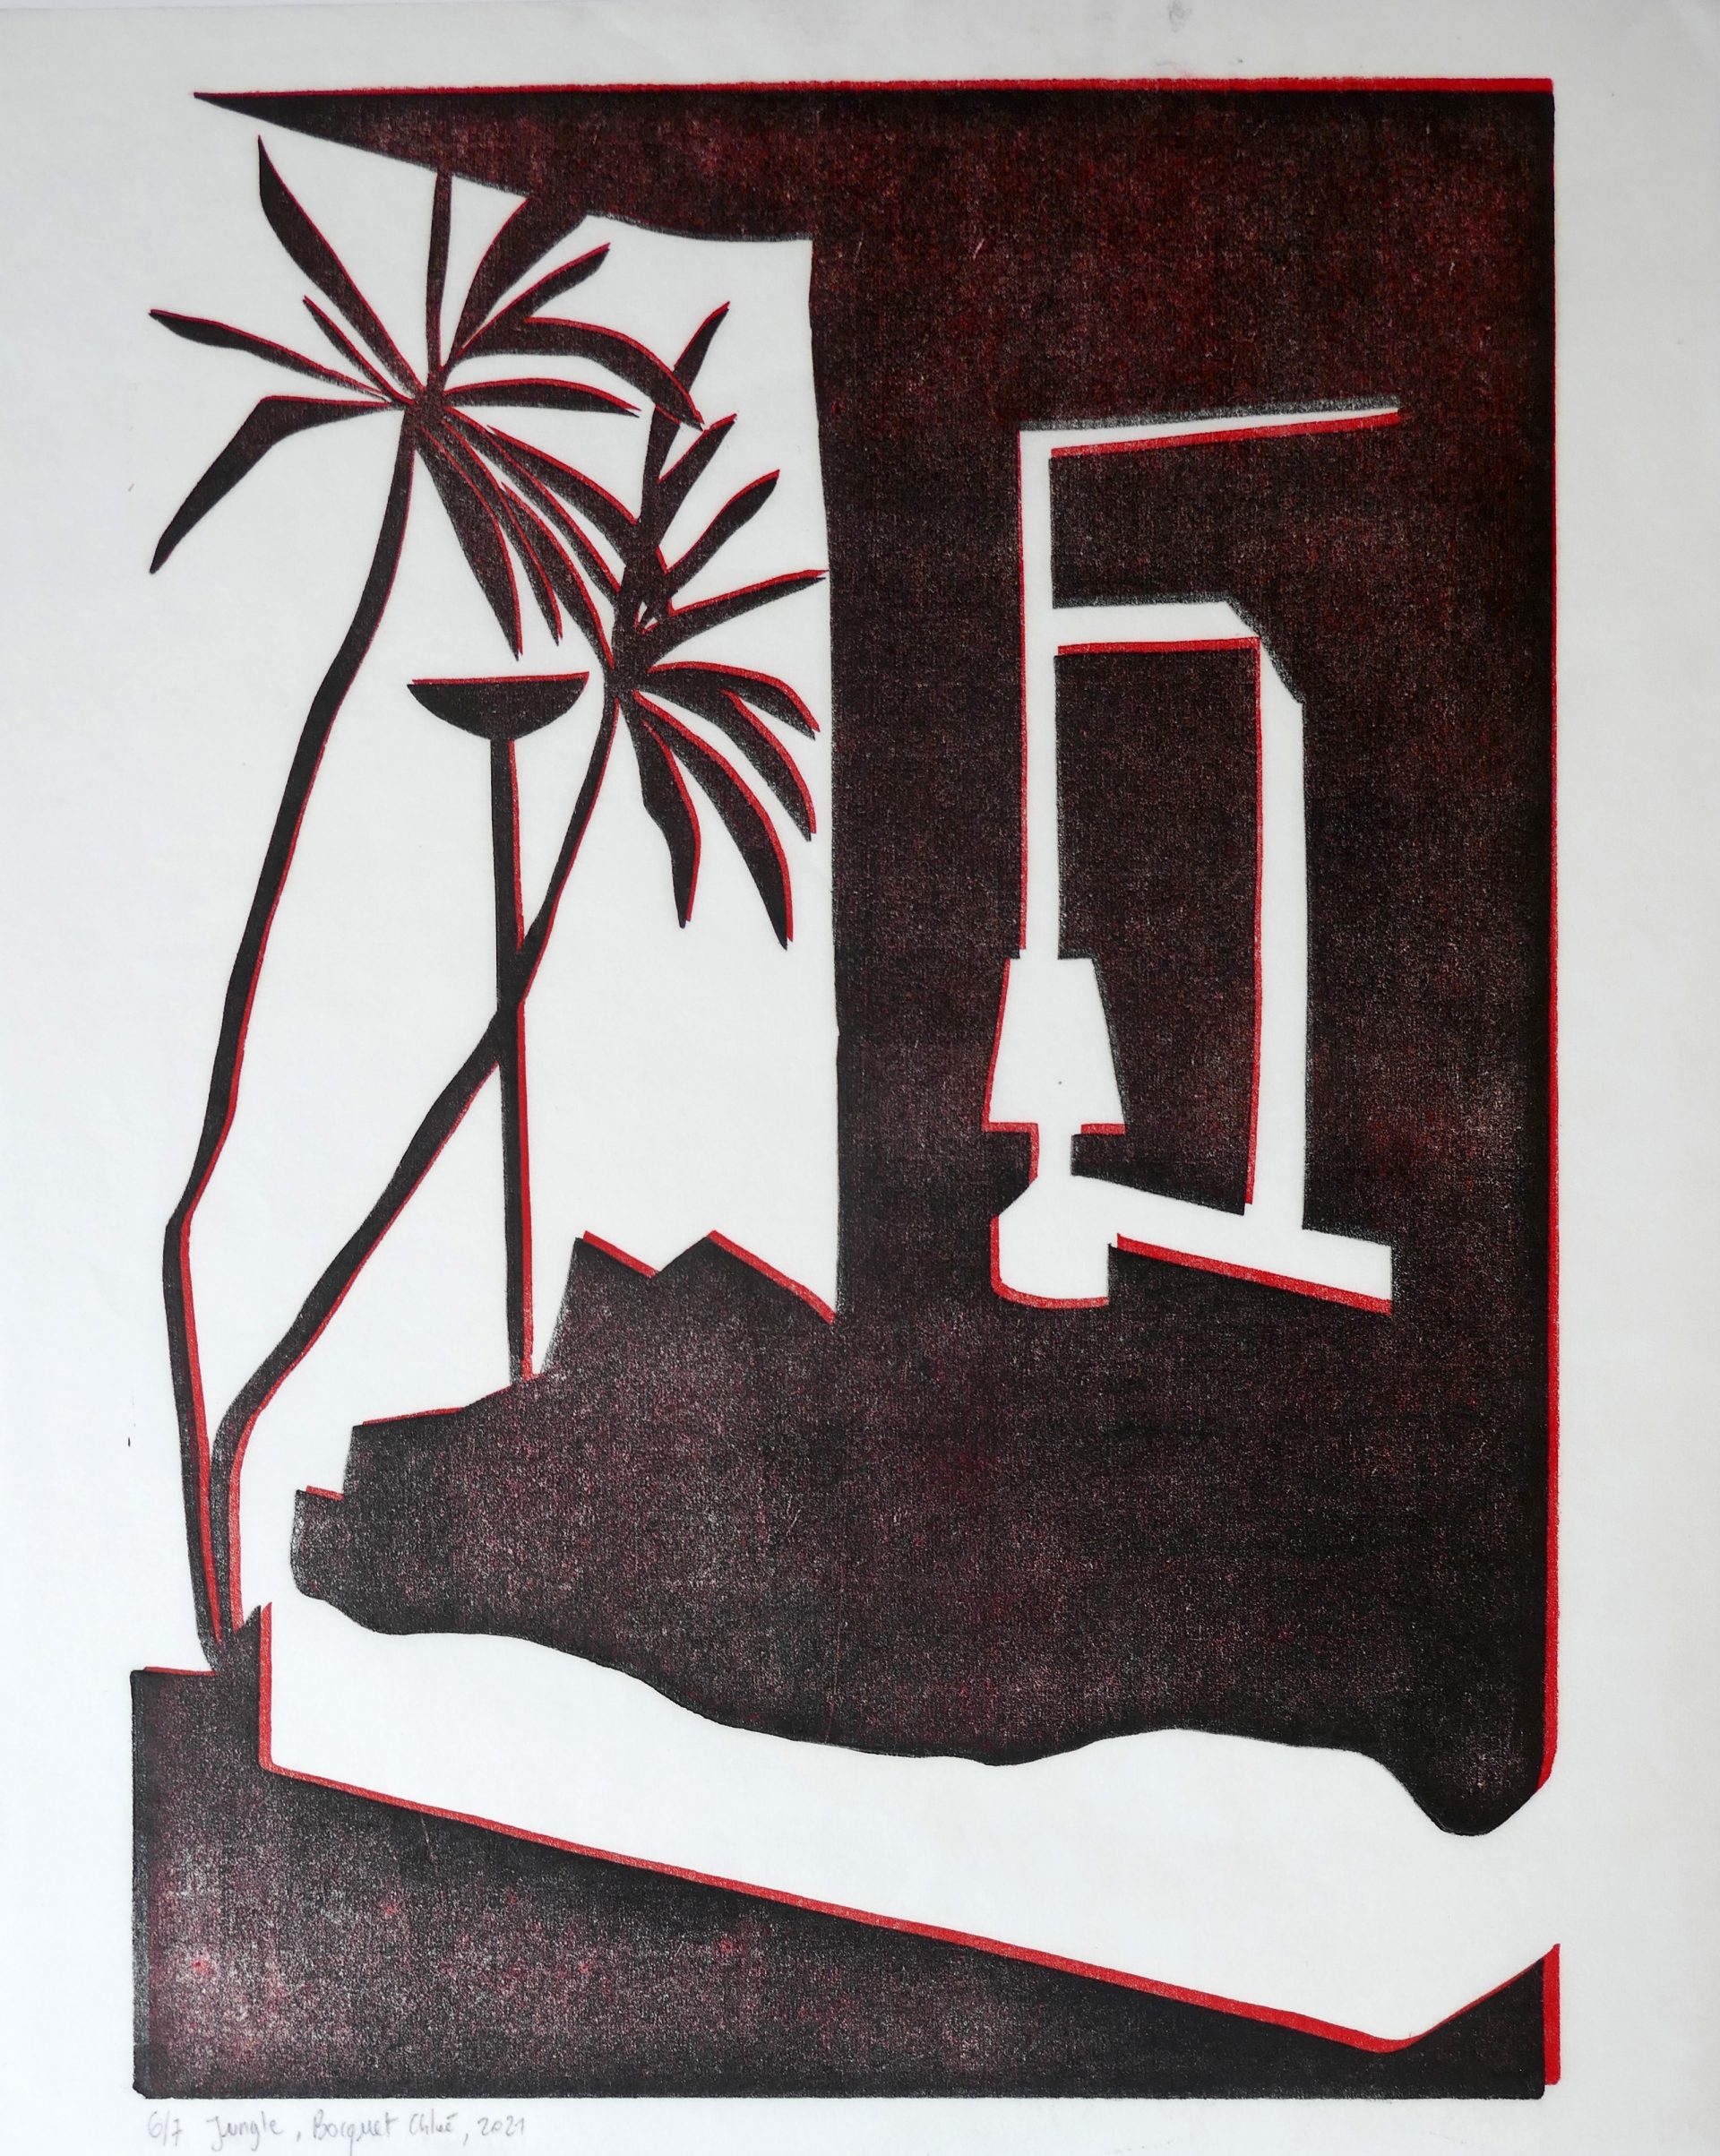 Jungle, 2021, handprinted linocut, image size 42,5x30 cm, paper size 45,5x37 cm, edition of 7